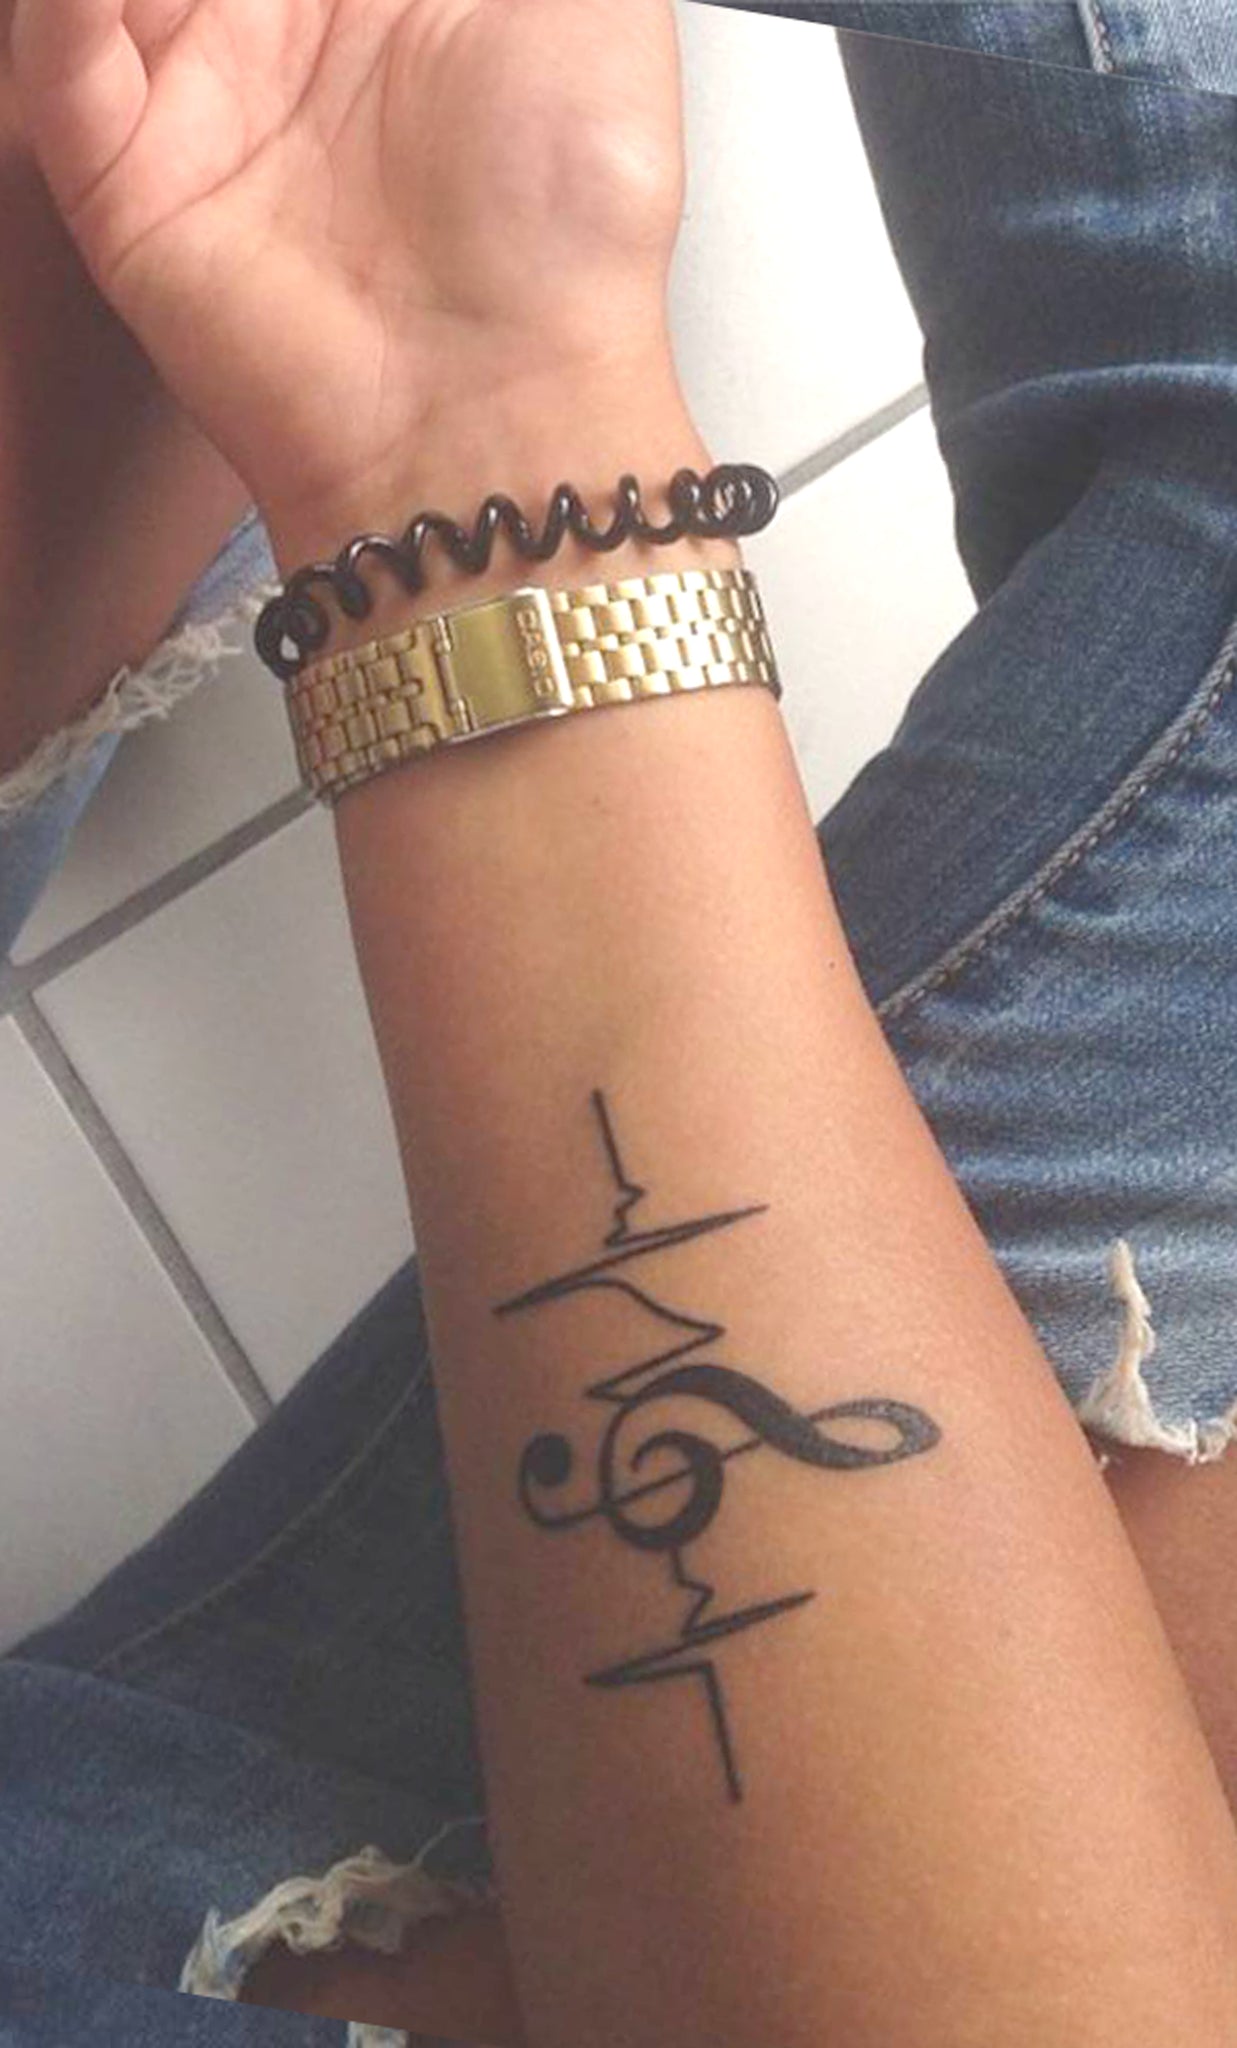 Black Music Note Forearm Tattoo Ideas for Women - Small Treble Clef Designs Arm Tat -  ideas de tatuaje de antebrazo de nota musical - www.MyBodiArt.com